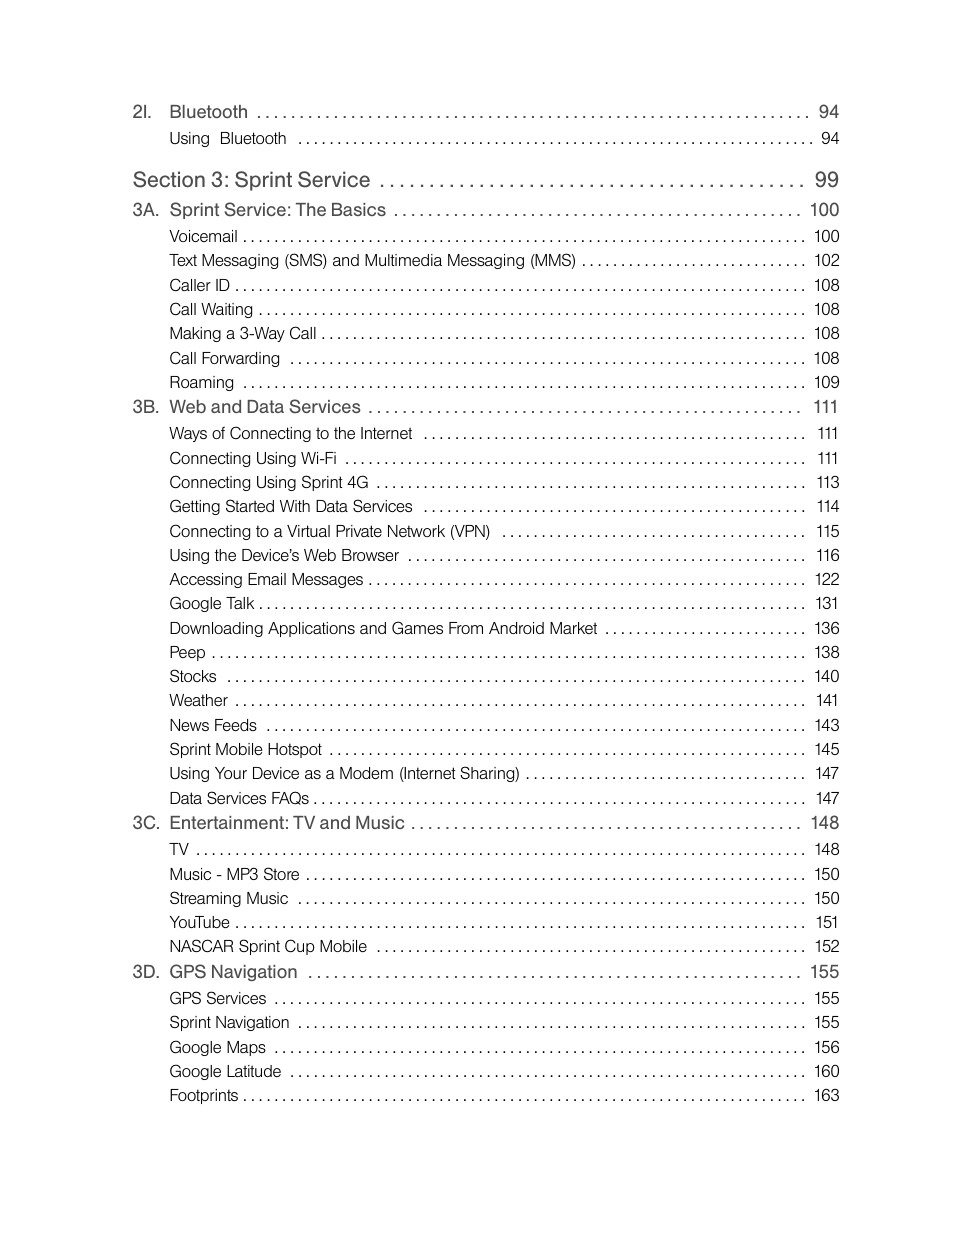 HTC EVO 4G User Manual | Page 5 / 197